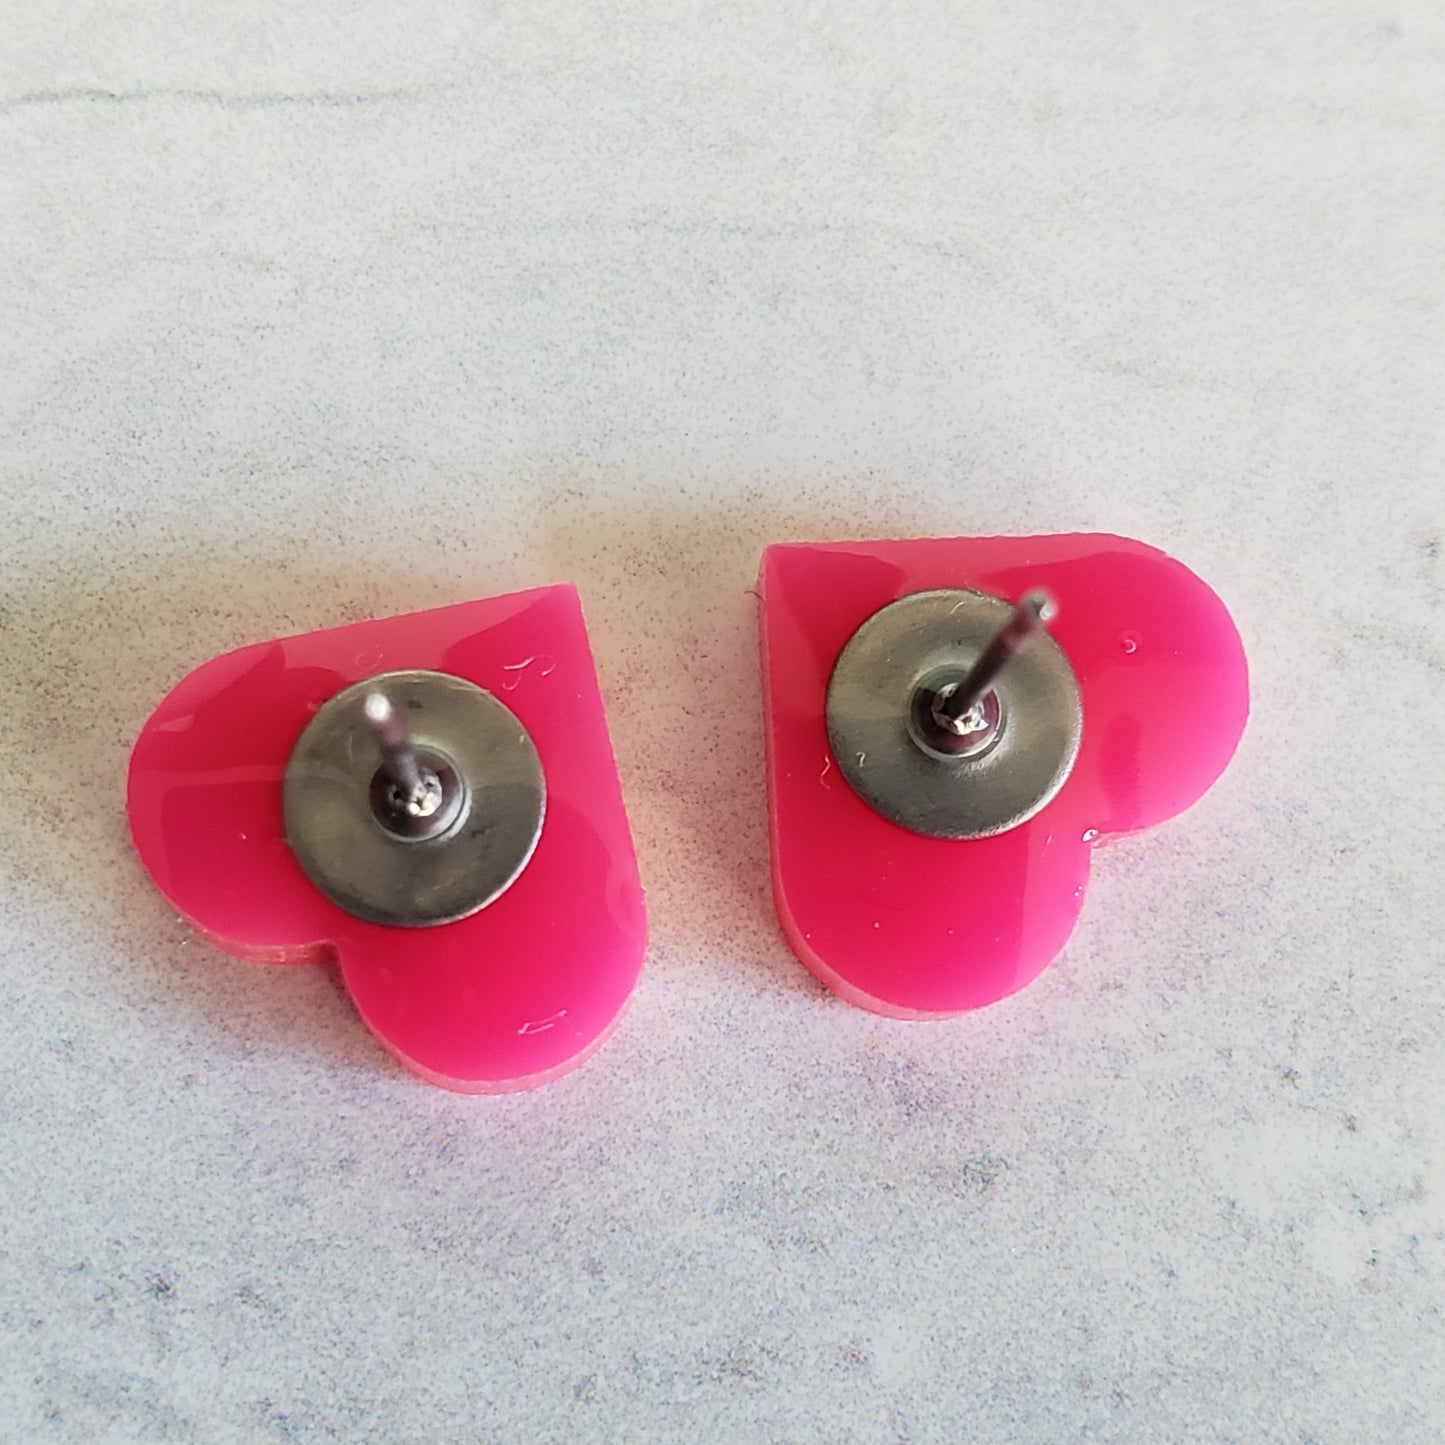 backside of gloss hot pink heart shaped stud earrings